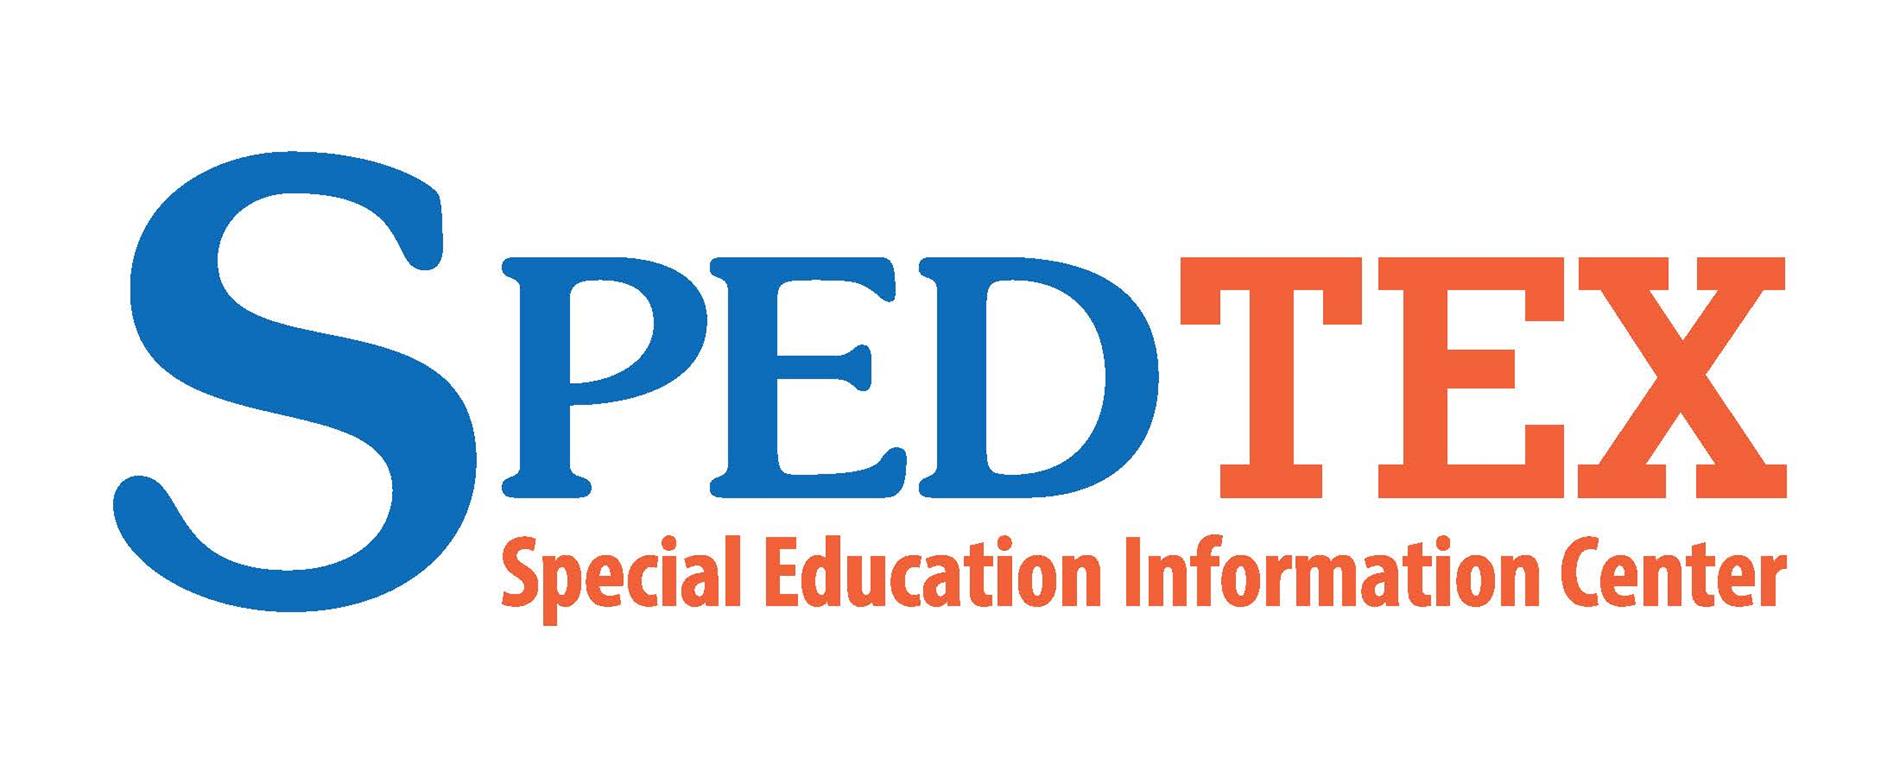 SpedTex  logo hyperlink to spedtex information